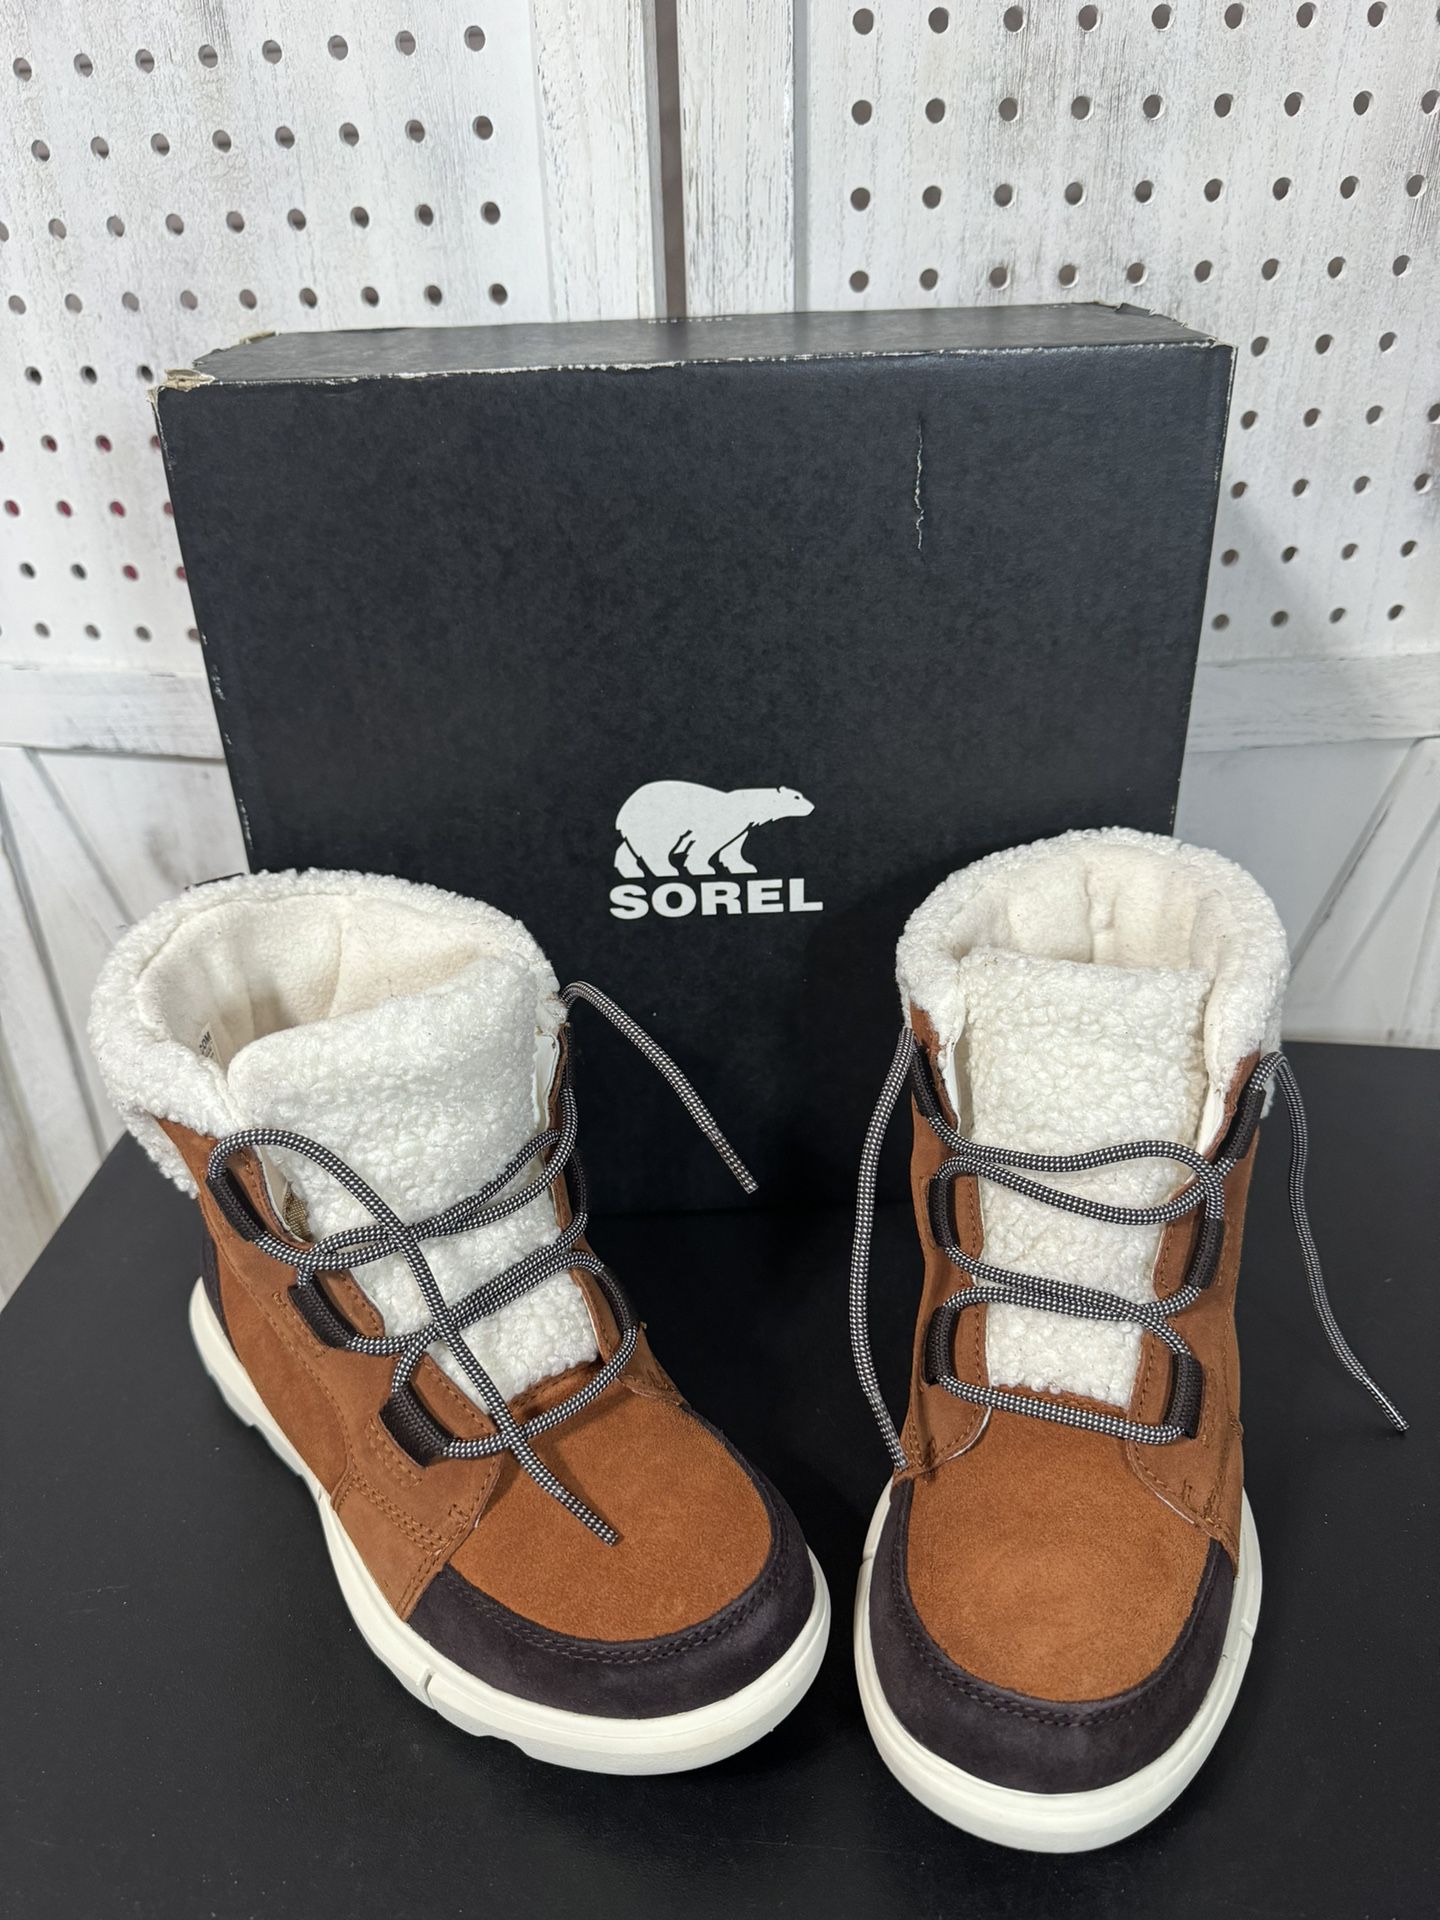 New in box size 7.5 Sorel Women's Explorer Ii Carnival Snow Boot